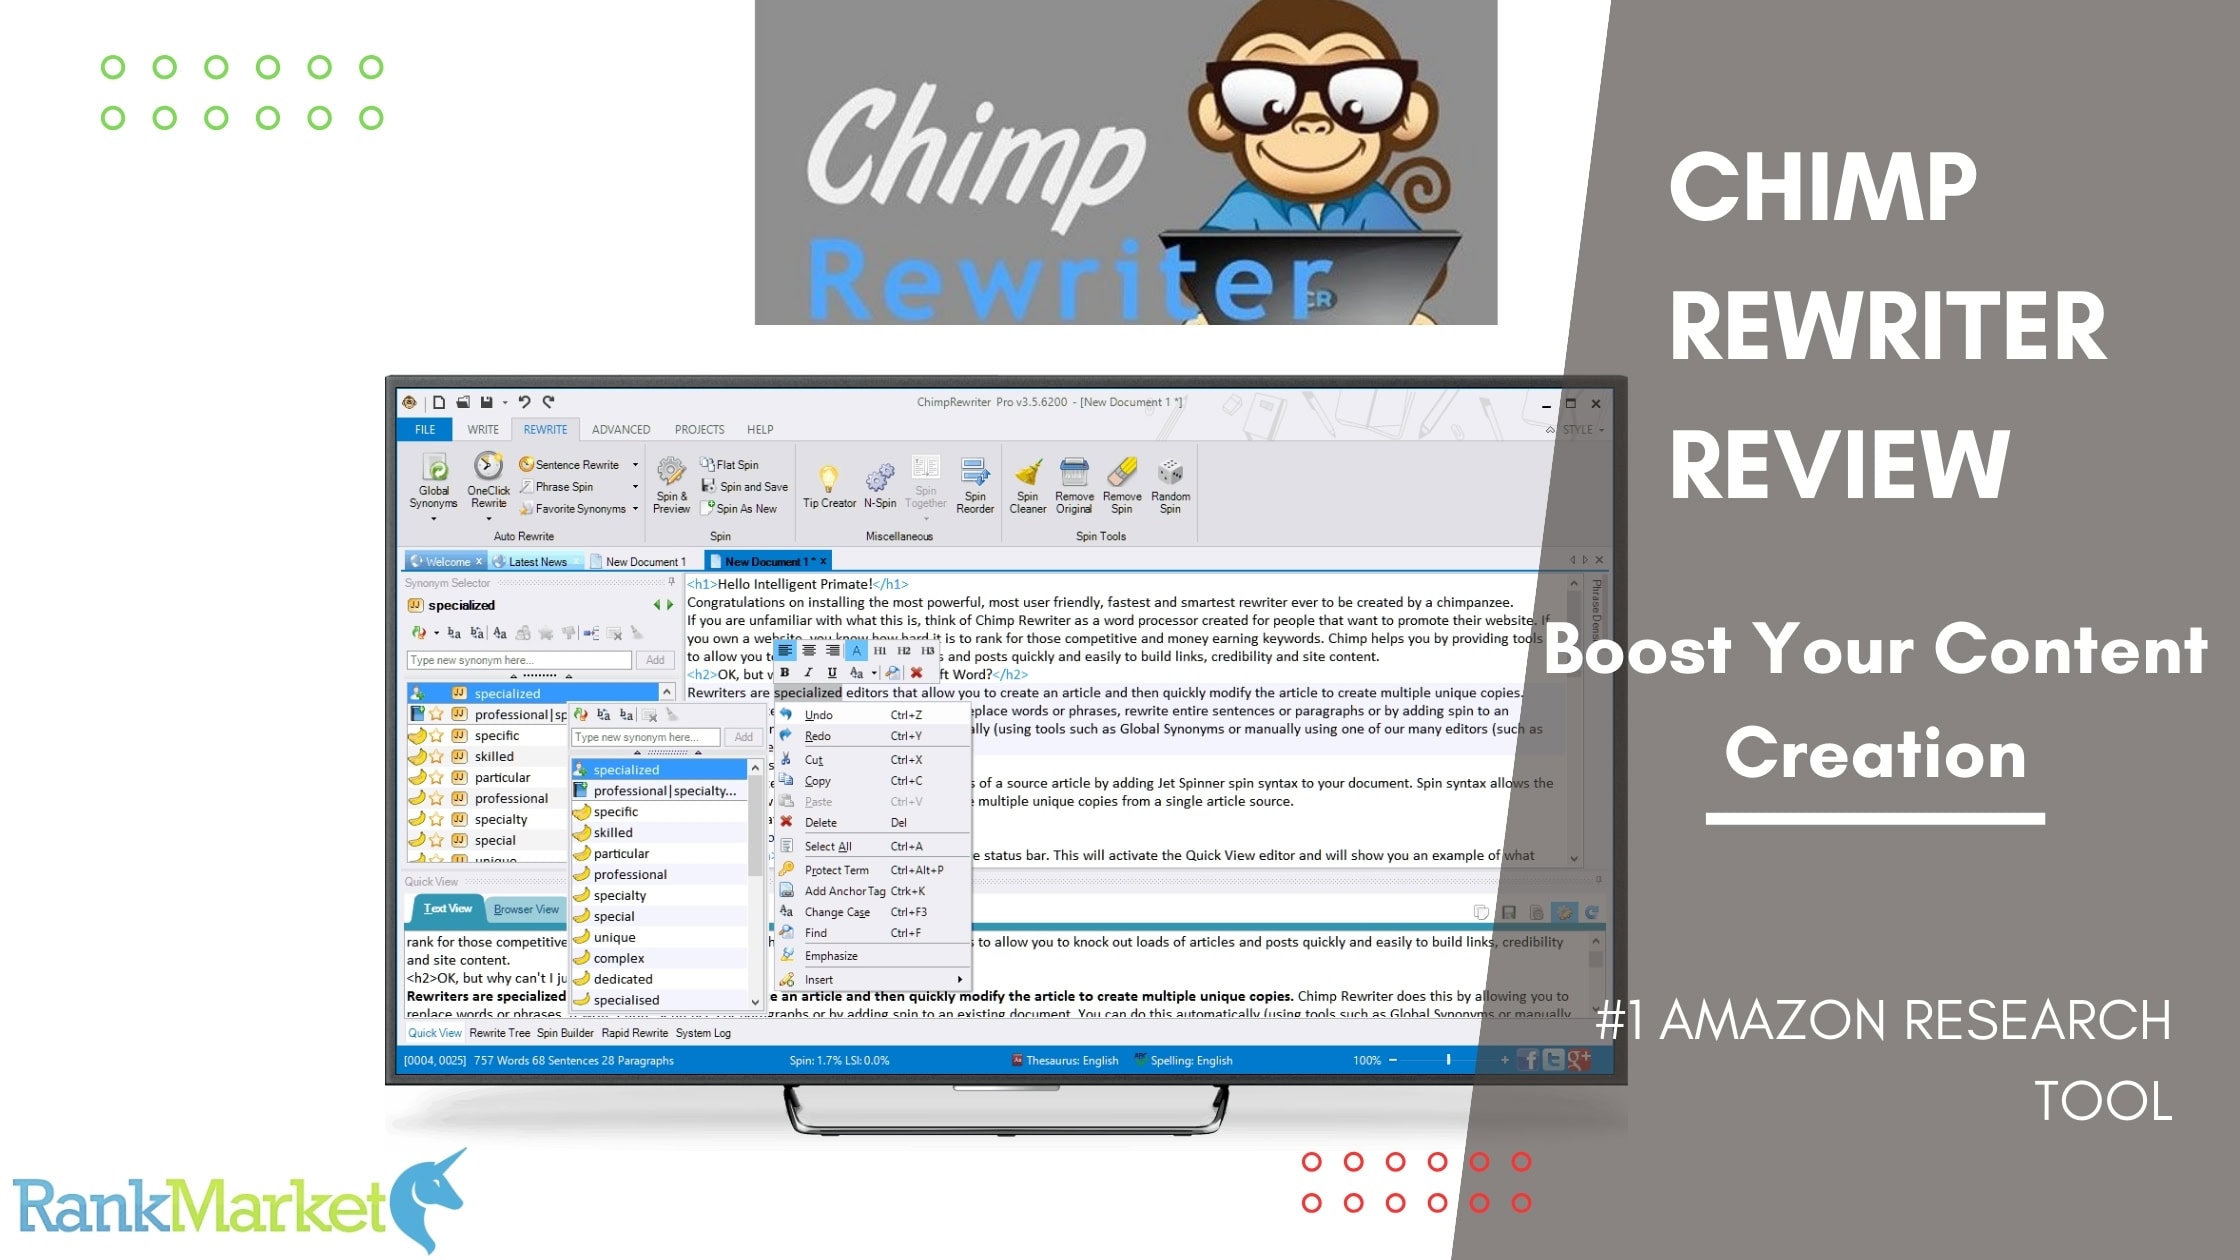 chimp-rewriter-review